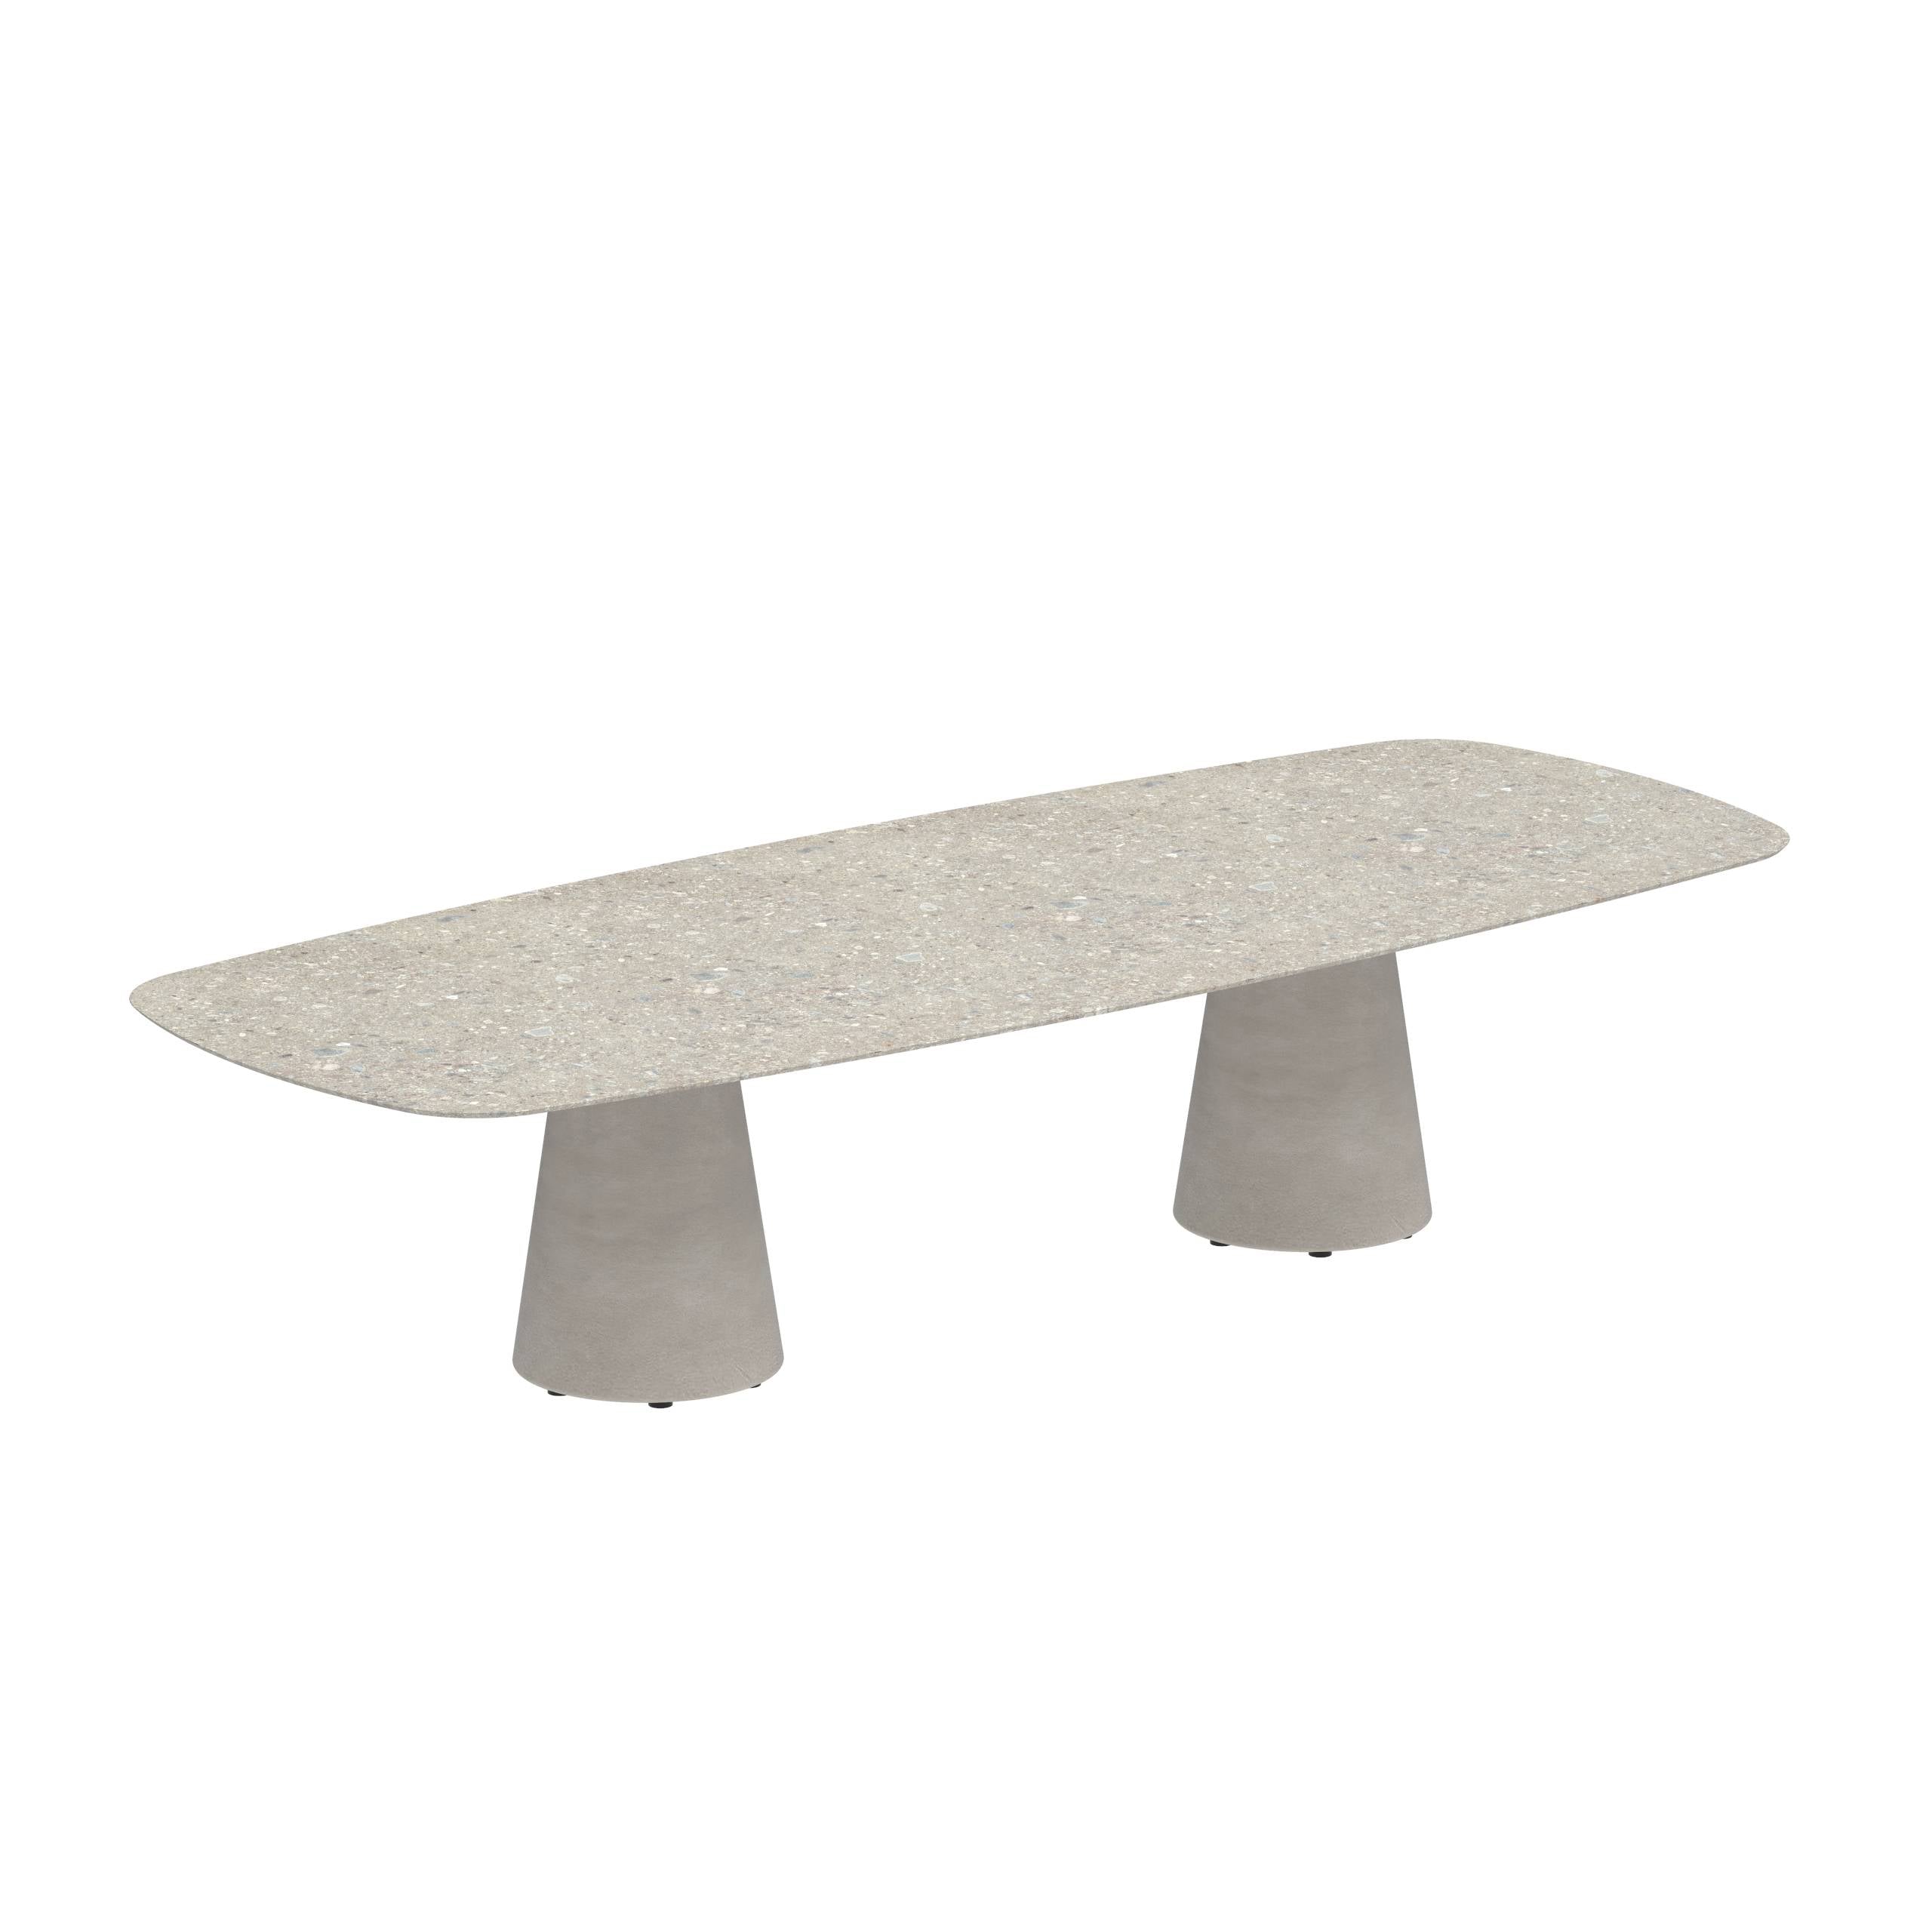 Conix Table 300x120 Cm Low Dining Legs Concrete Cement Grey - Table Top Ceramic Ceppo Dolomitica